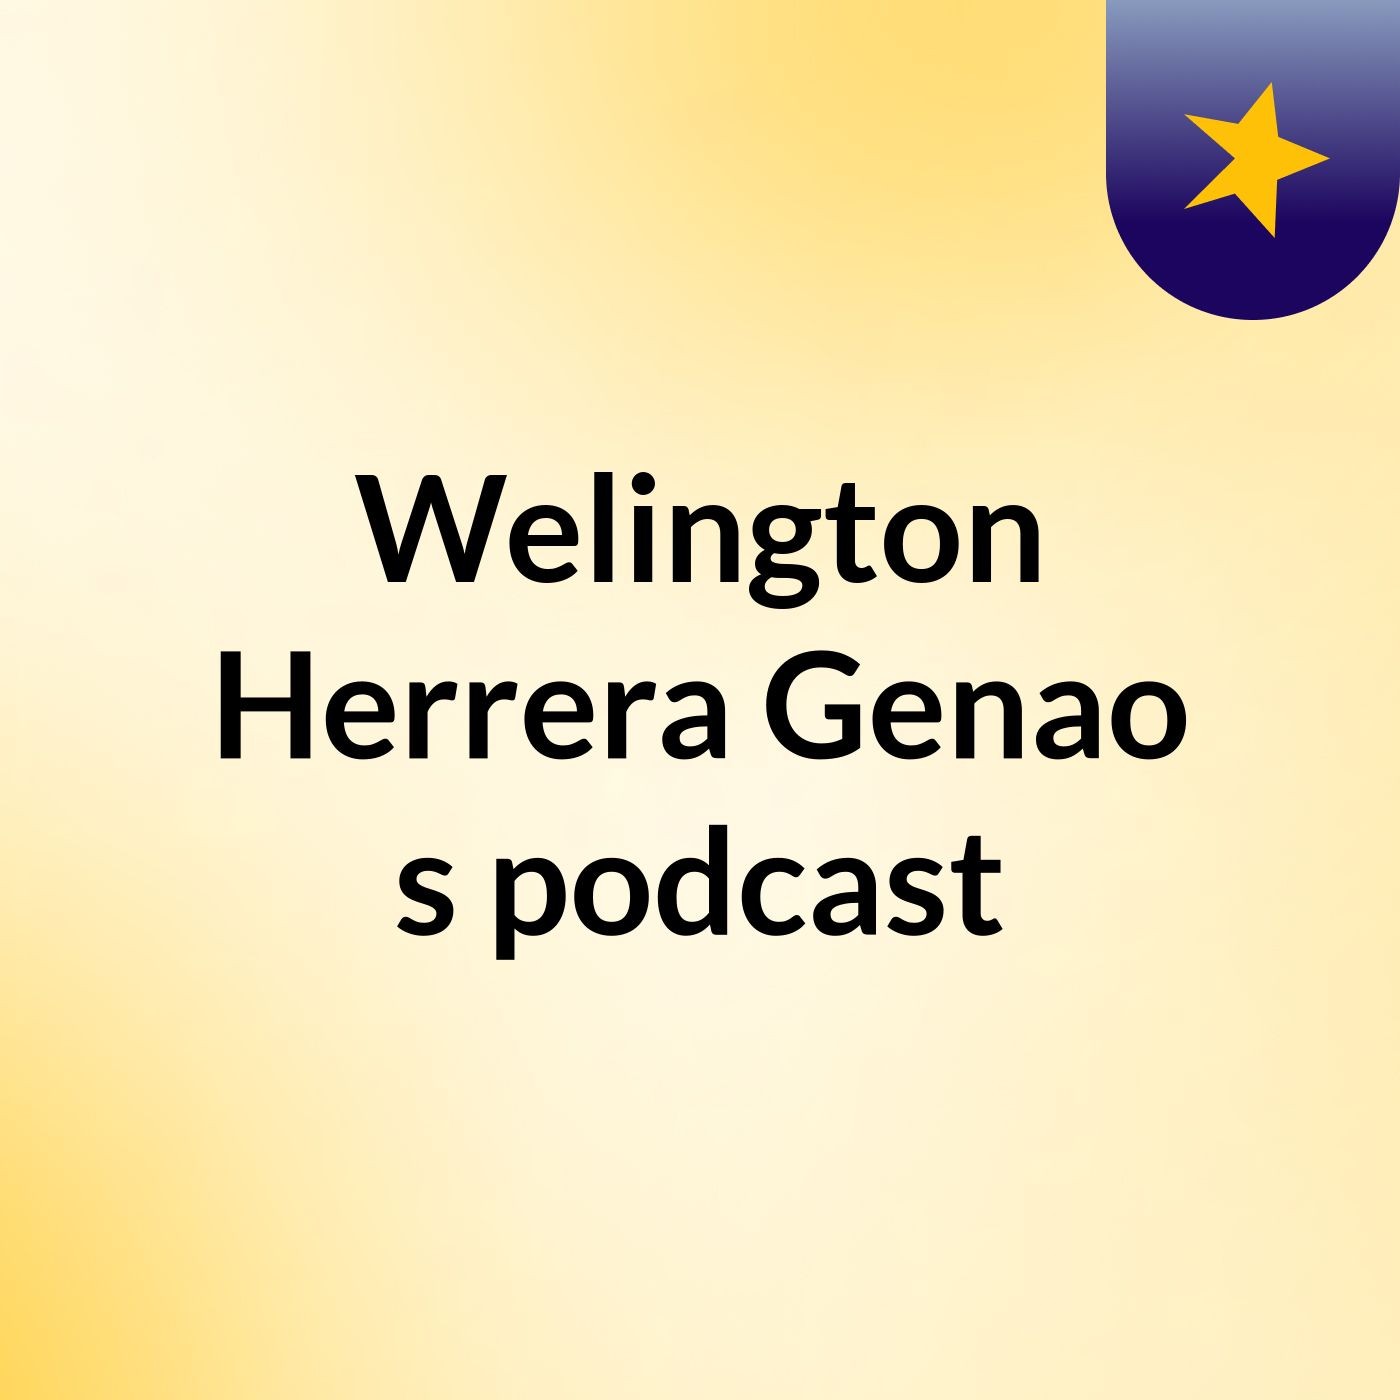 Welington Herrera Genao's podcast